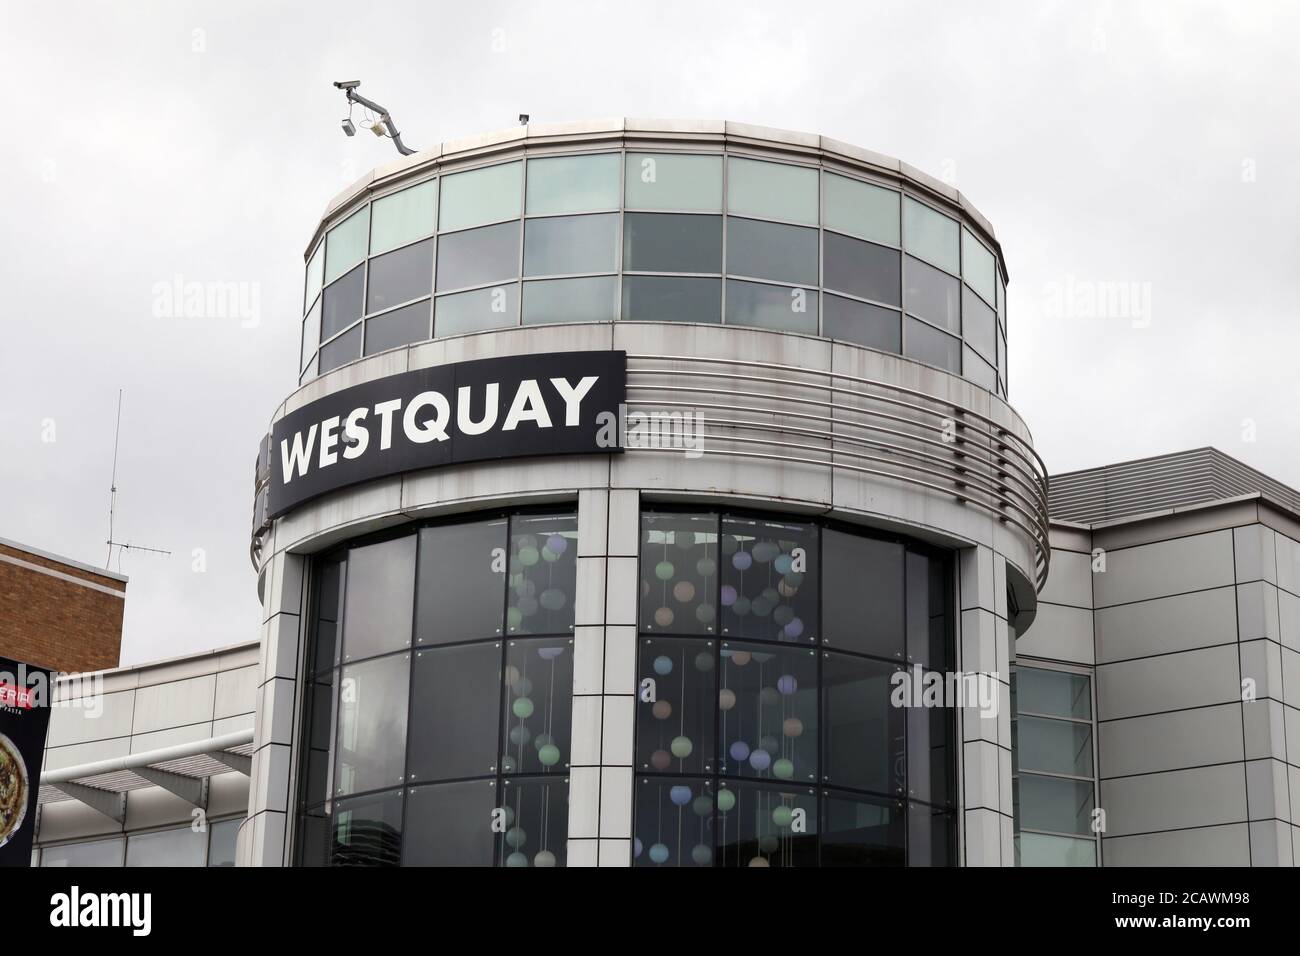 West quay Shopping Centre, external view, Bargate Quarter, Bargate Street, Southampton, England, UK, August 2020 Stock Photo